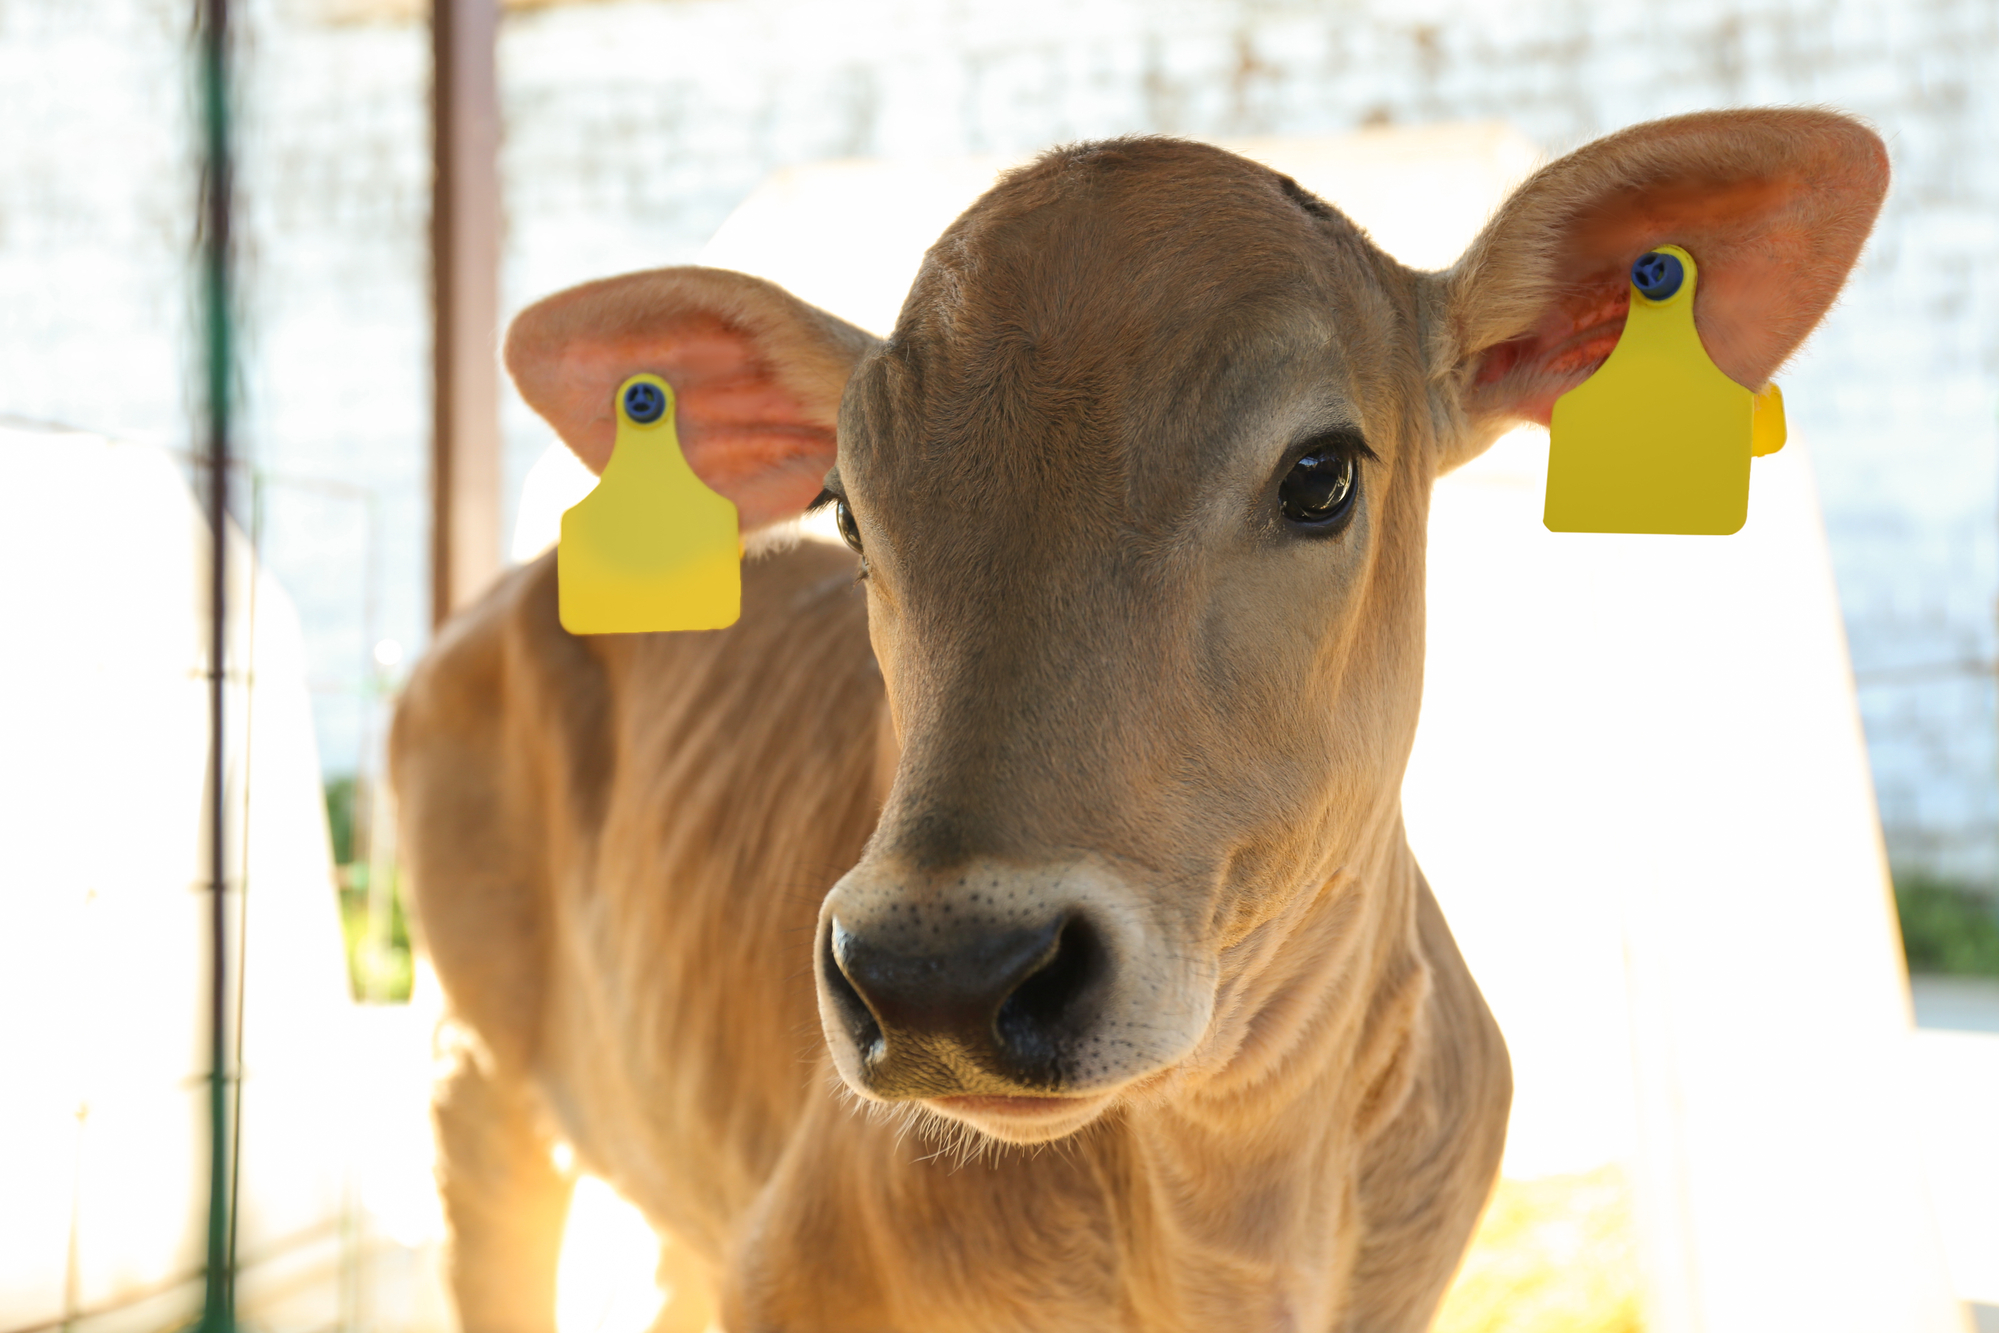 Pretty little calf on farm, closeup. Animal husbandry